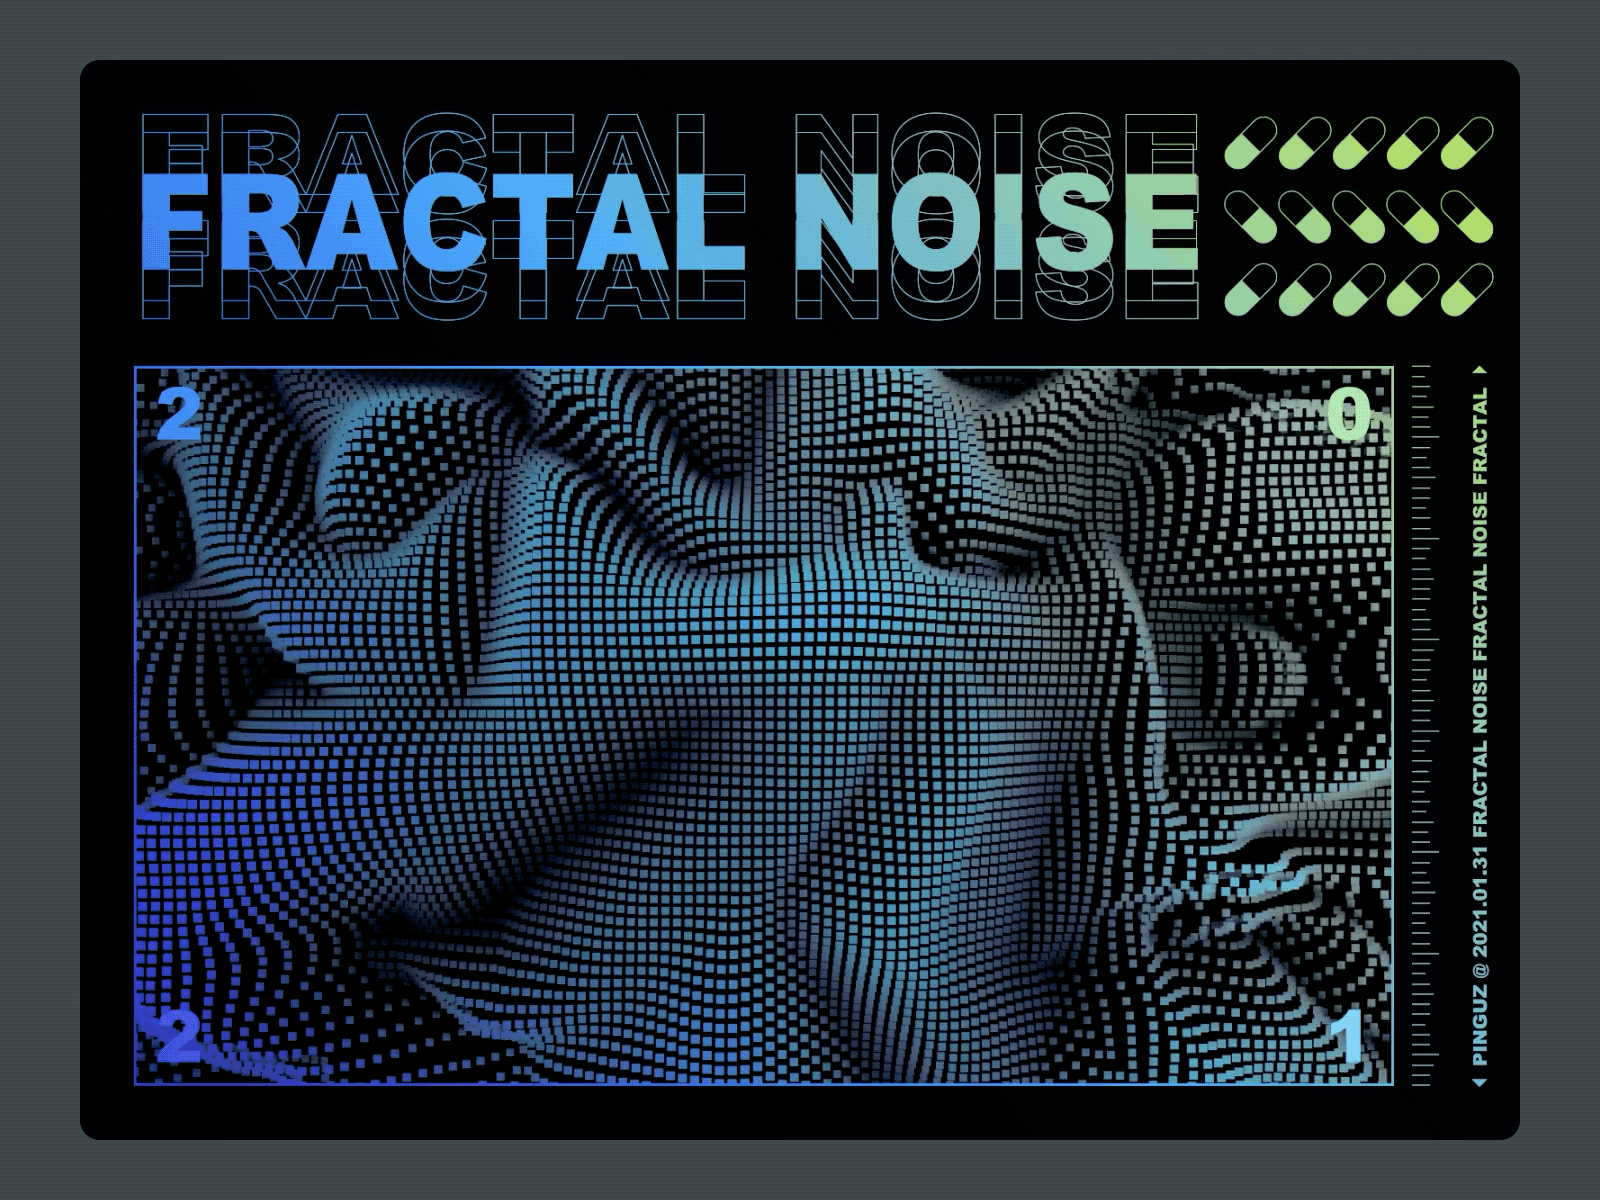 Fractal noise